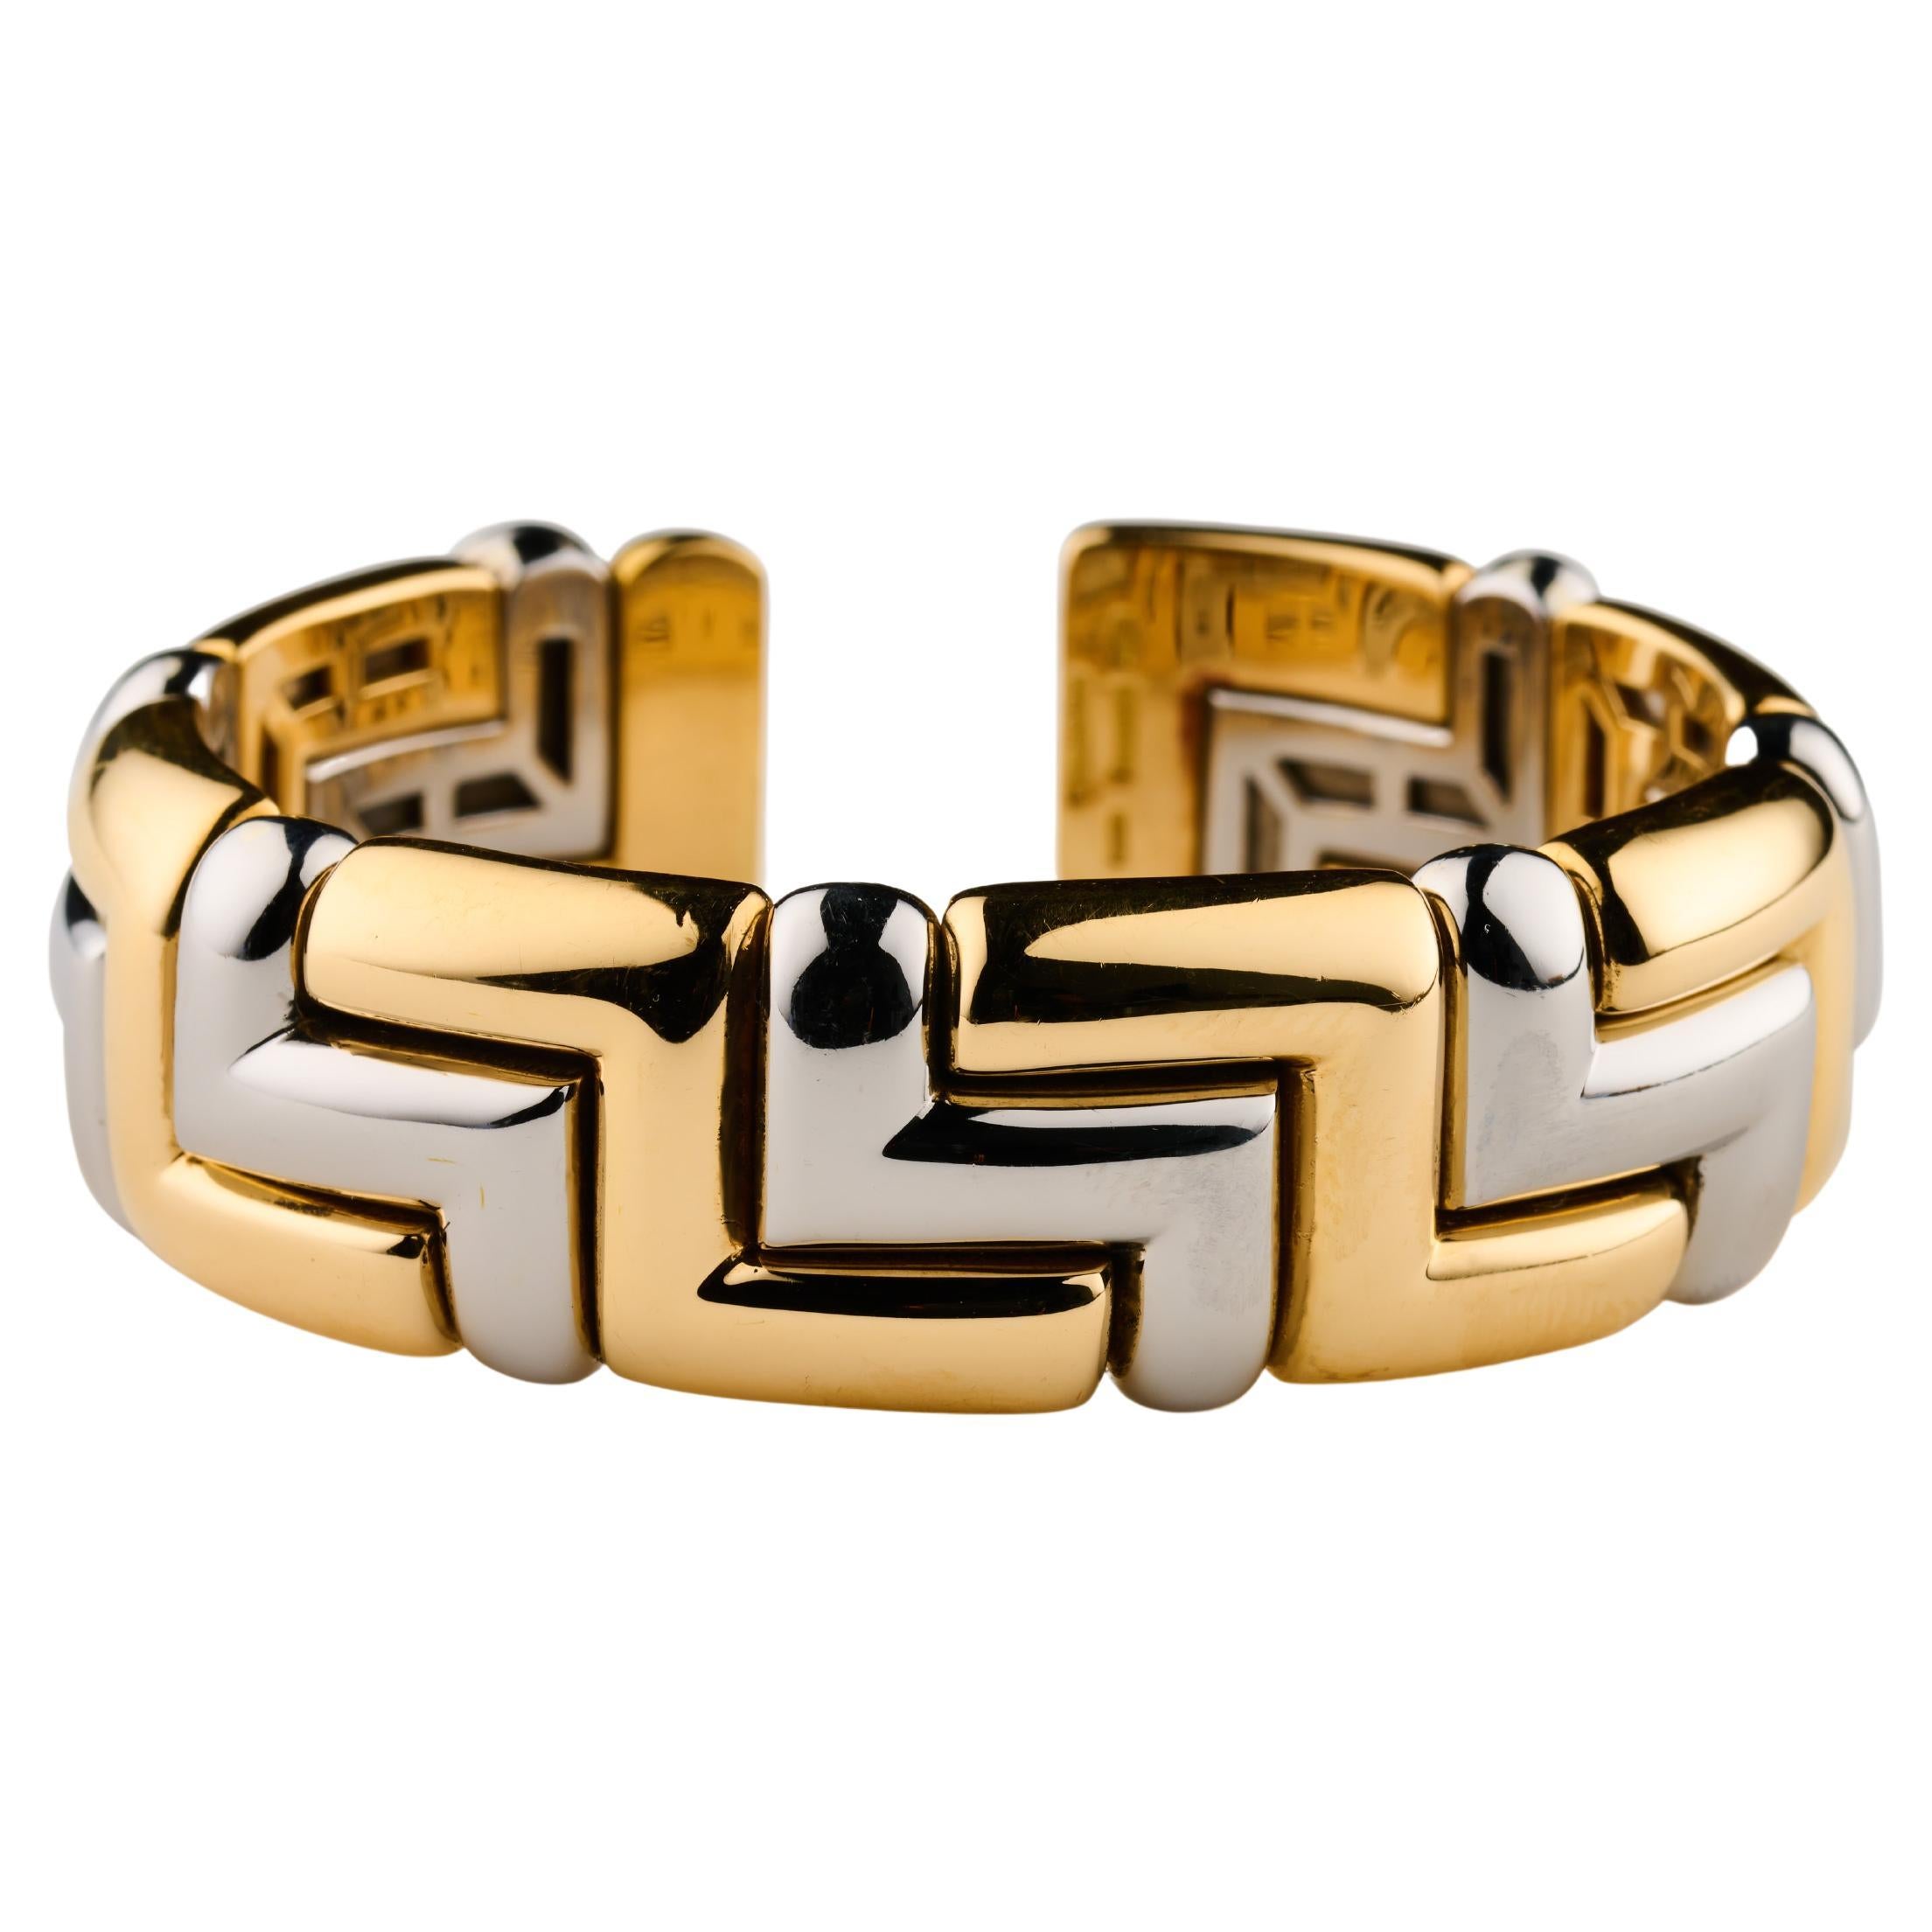 Bvlgari vintage yellow gold and steel cuff bangle bracelet